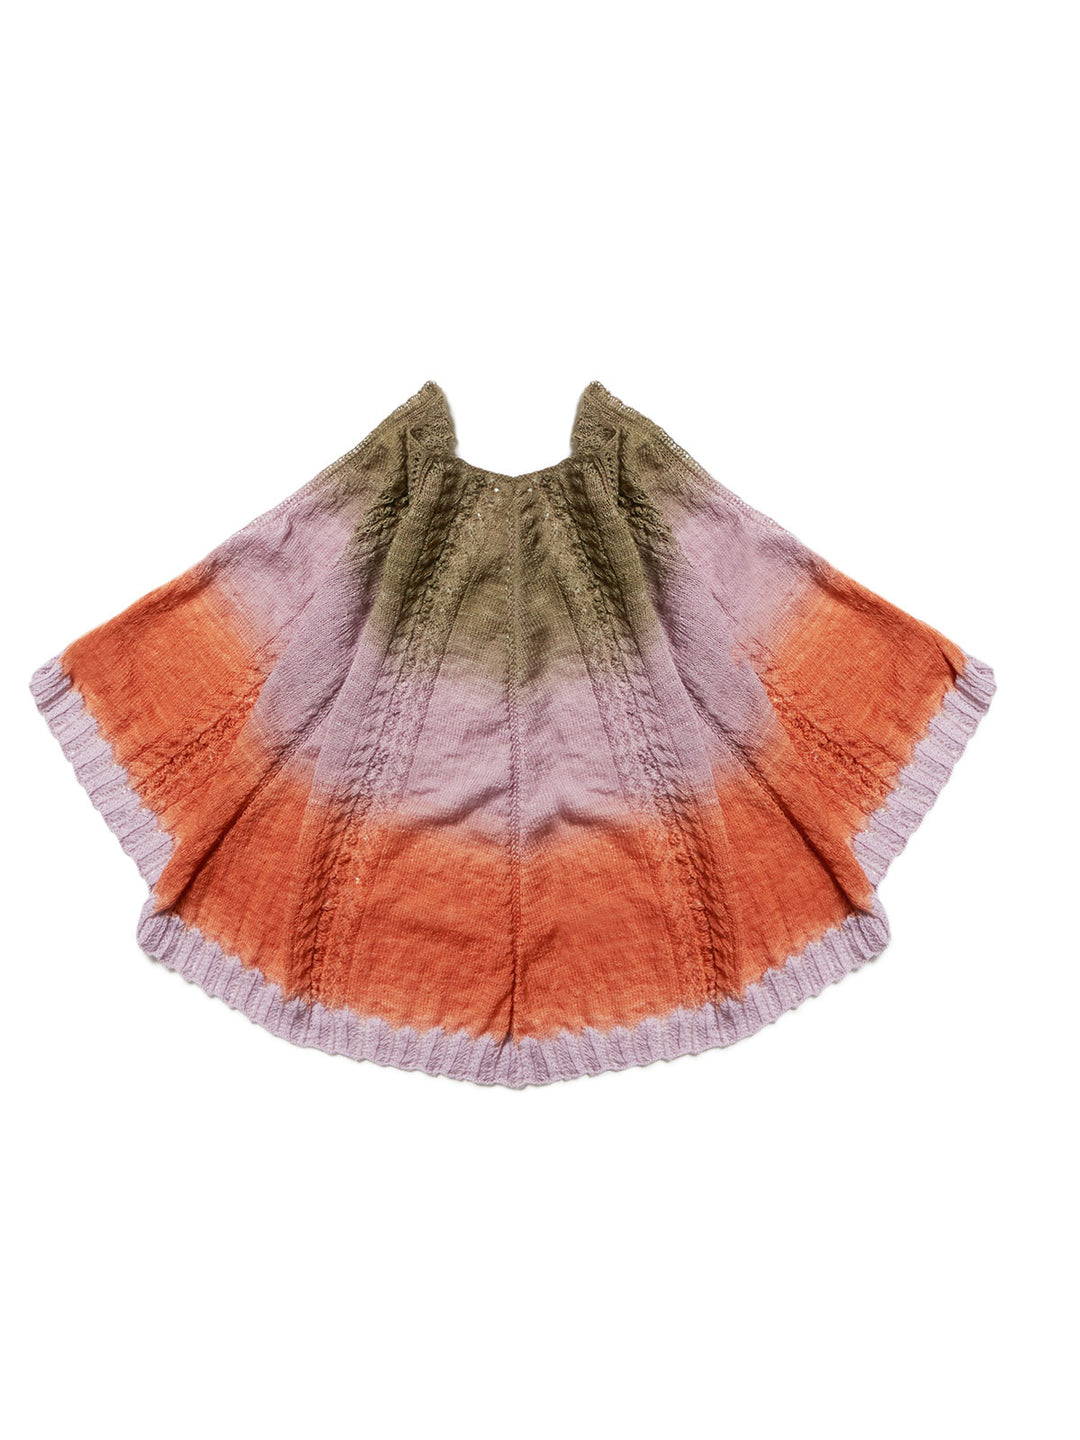 Breipakket Cool Wool Lace Hand-dyed stola